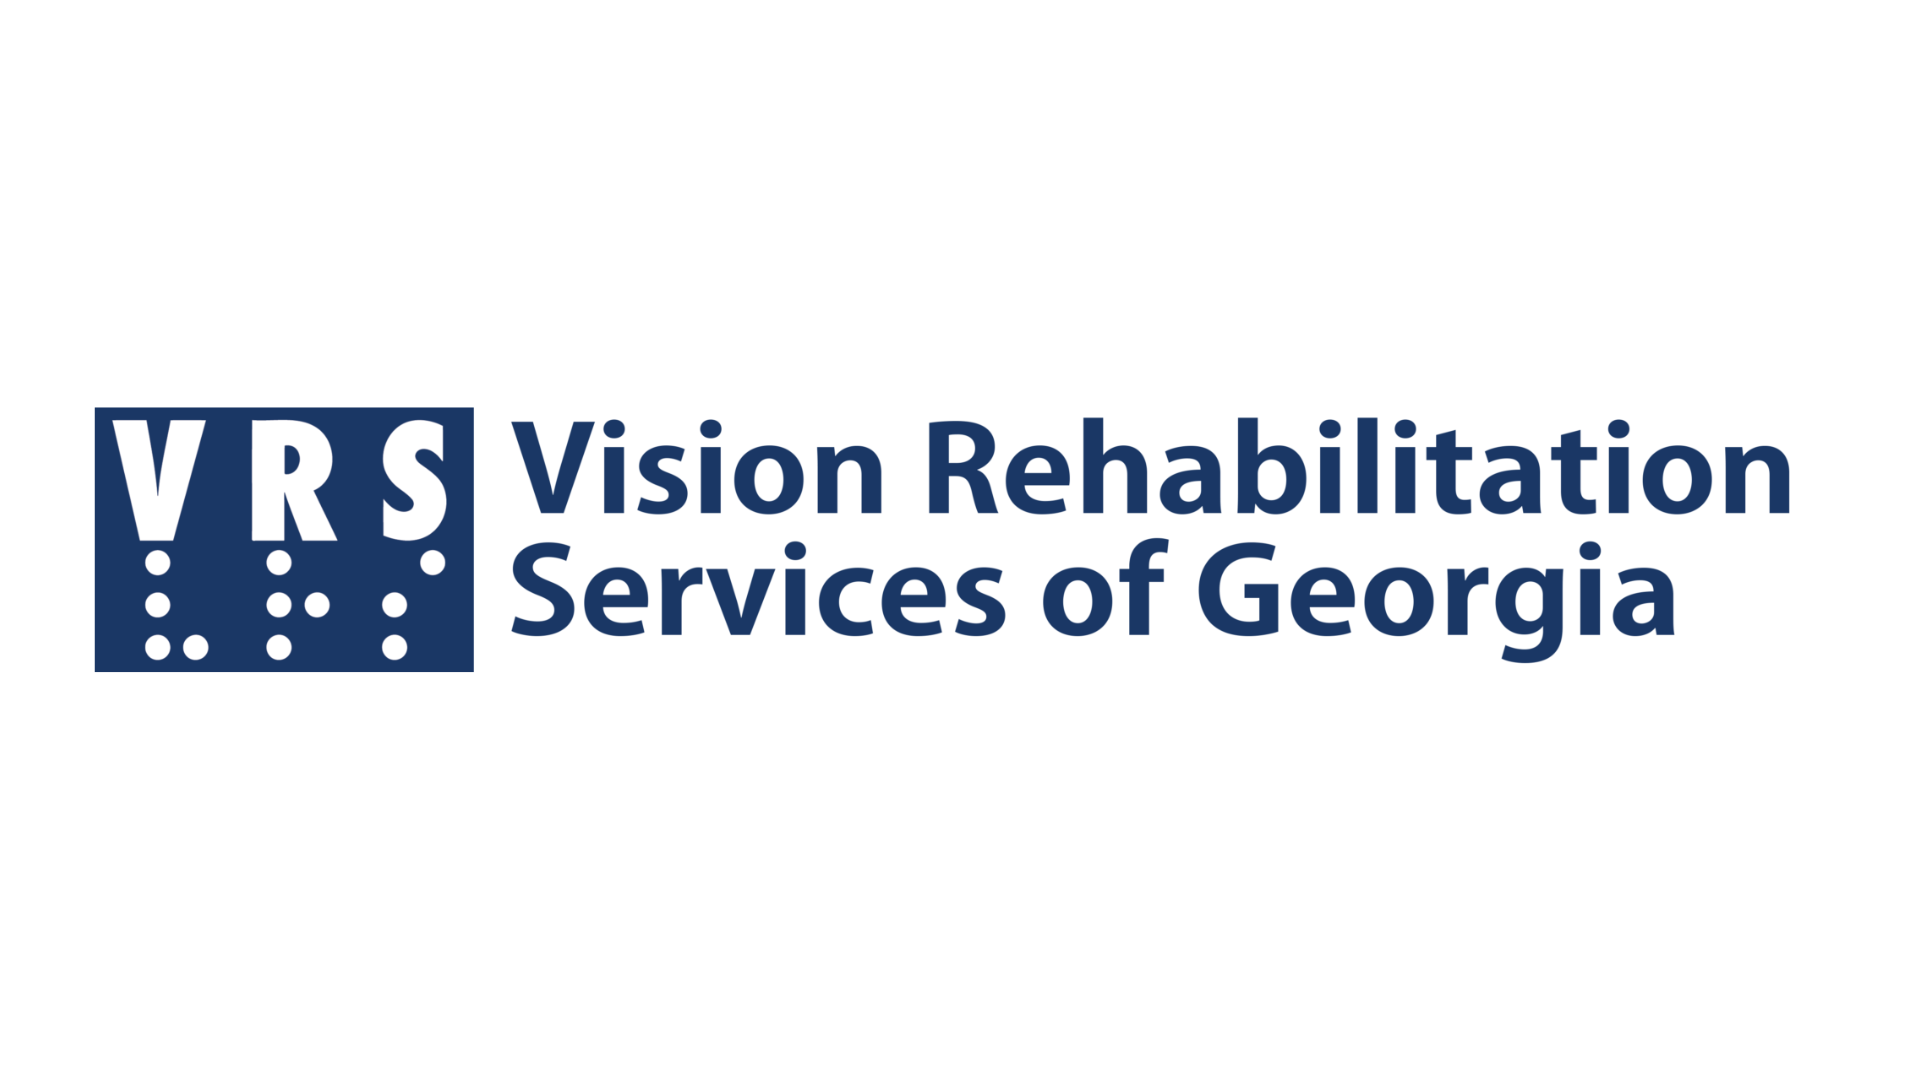 Image of the Vision Rehabilitation Services of Georgia logo.